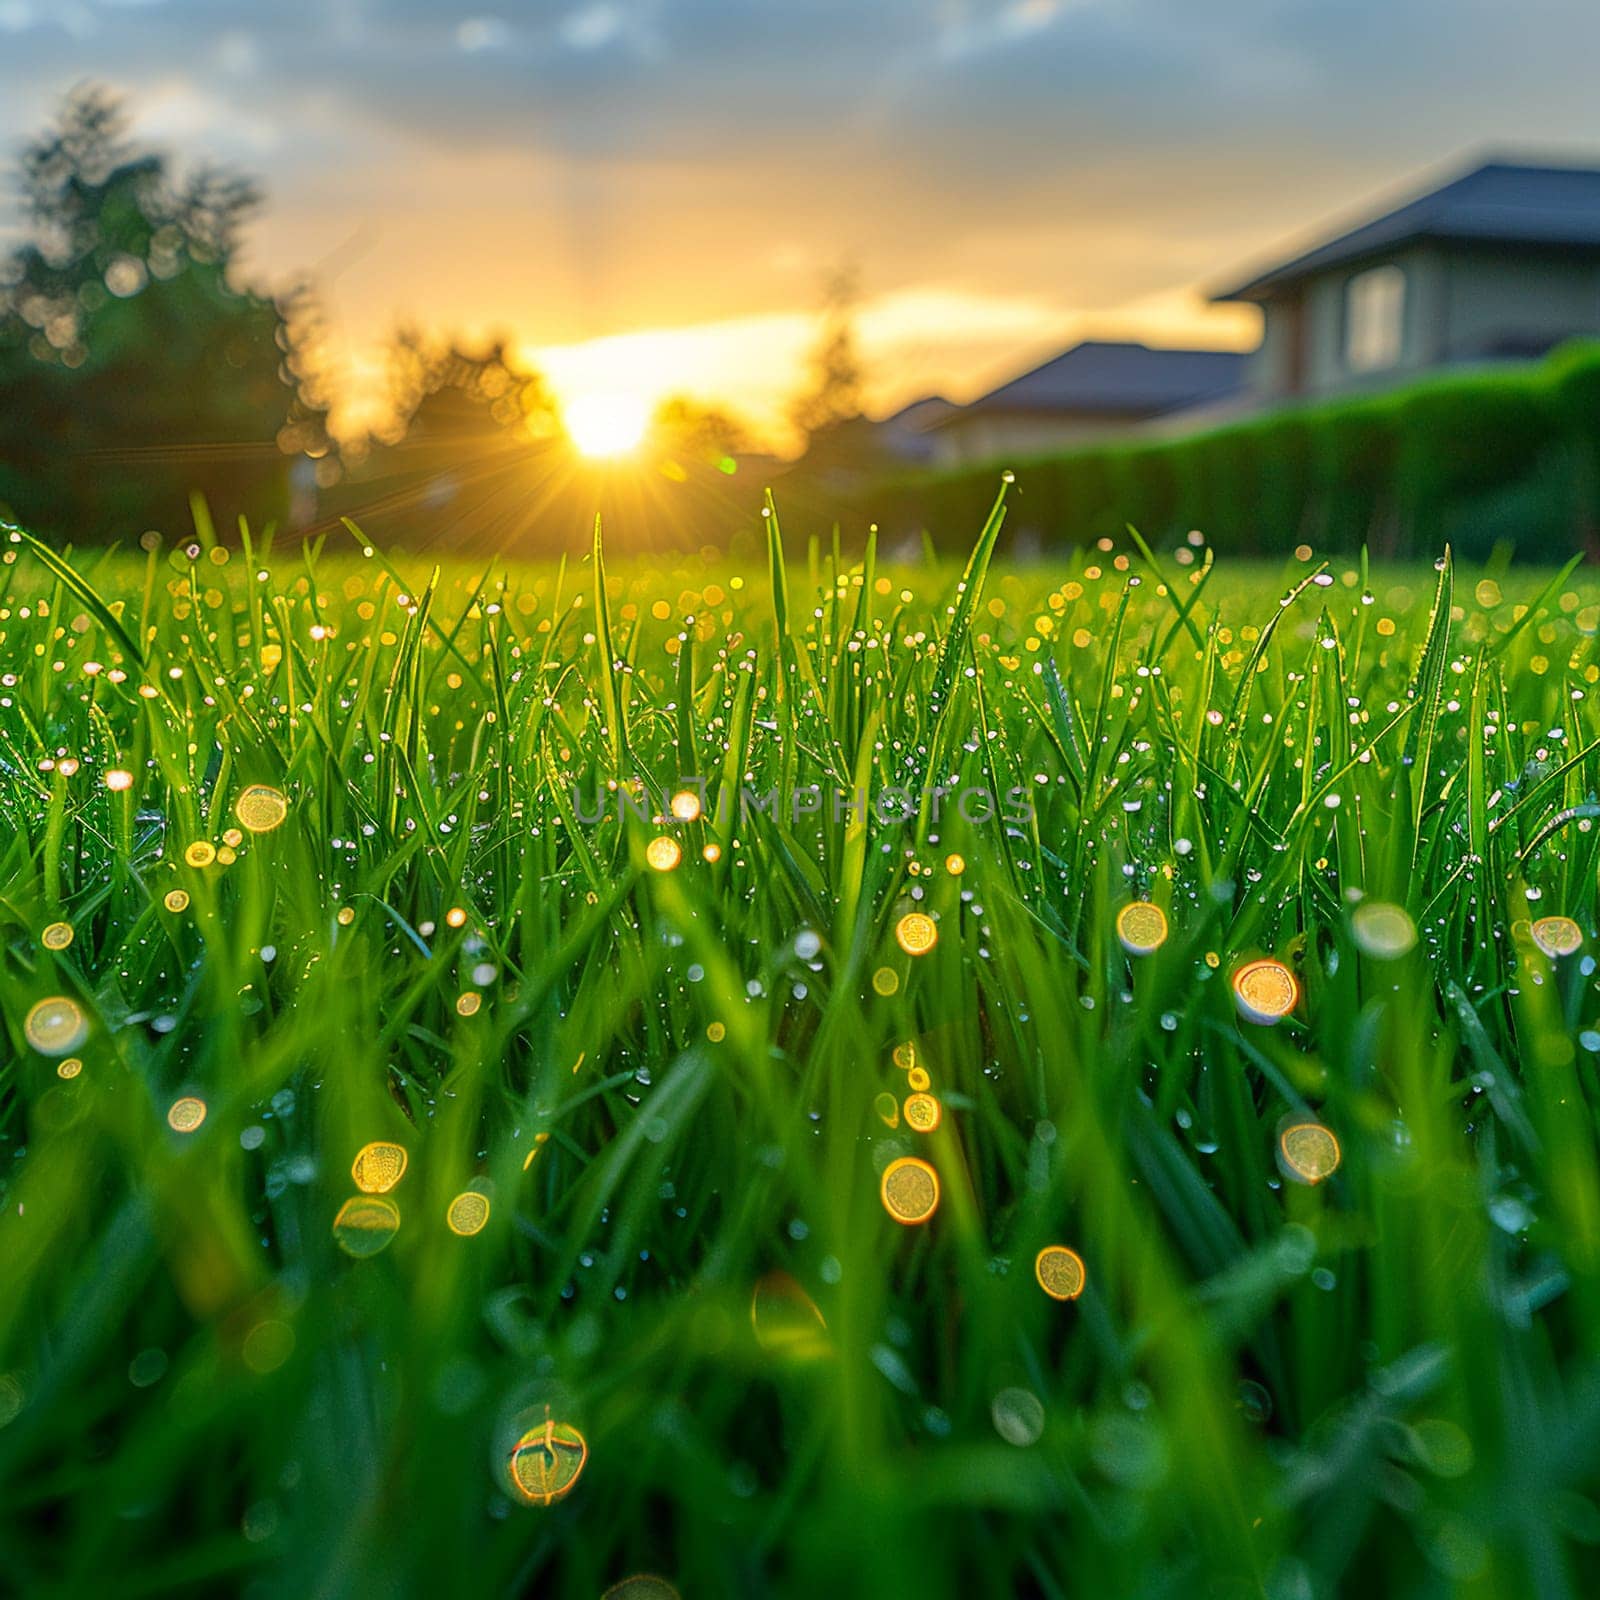 Fresh dew on vibrant green grass at sunrise, symbolizing new beginnings.